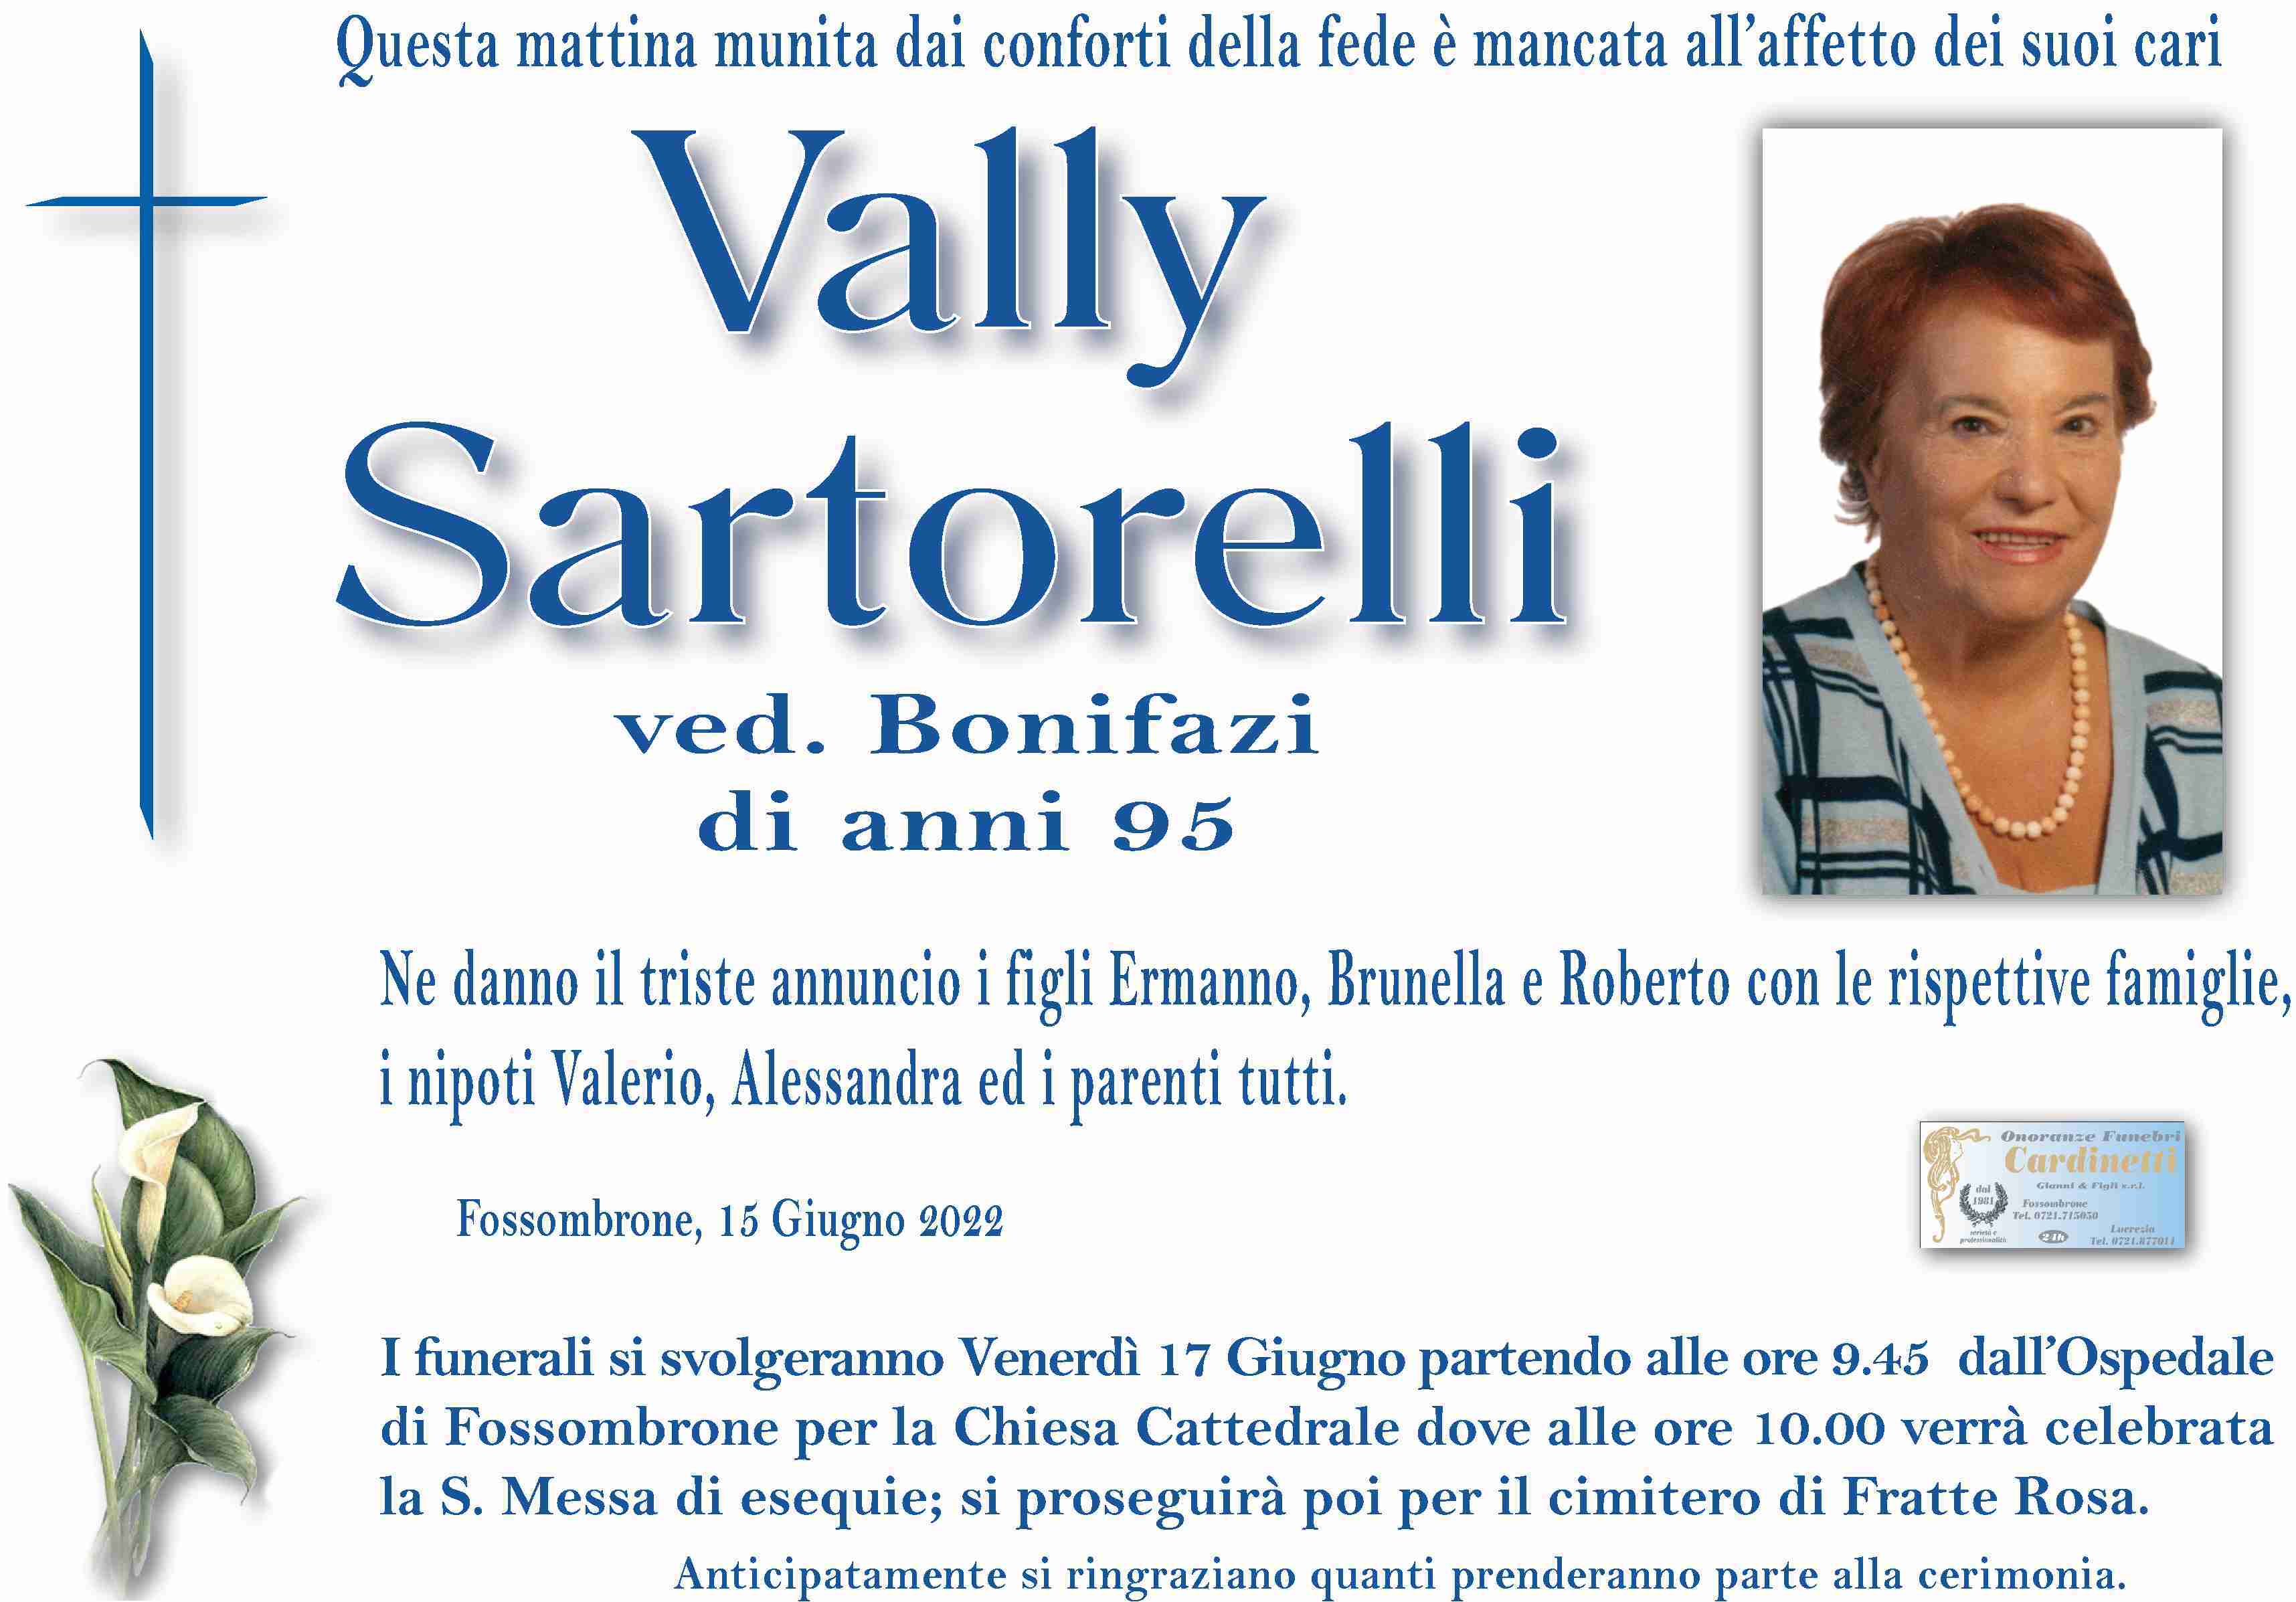 Vally Sartorelli